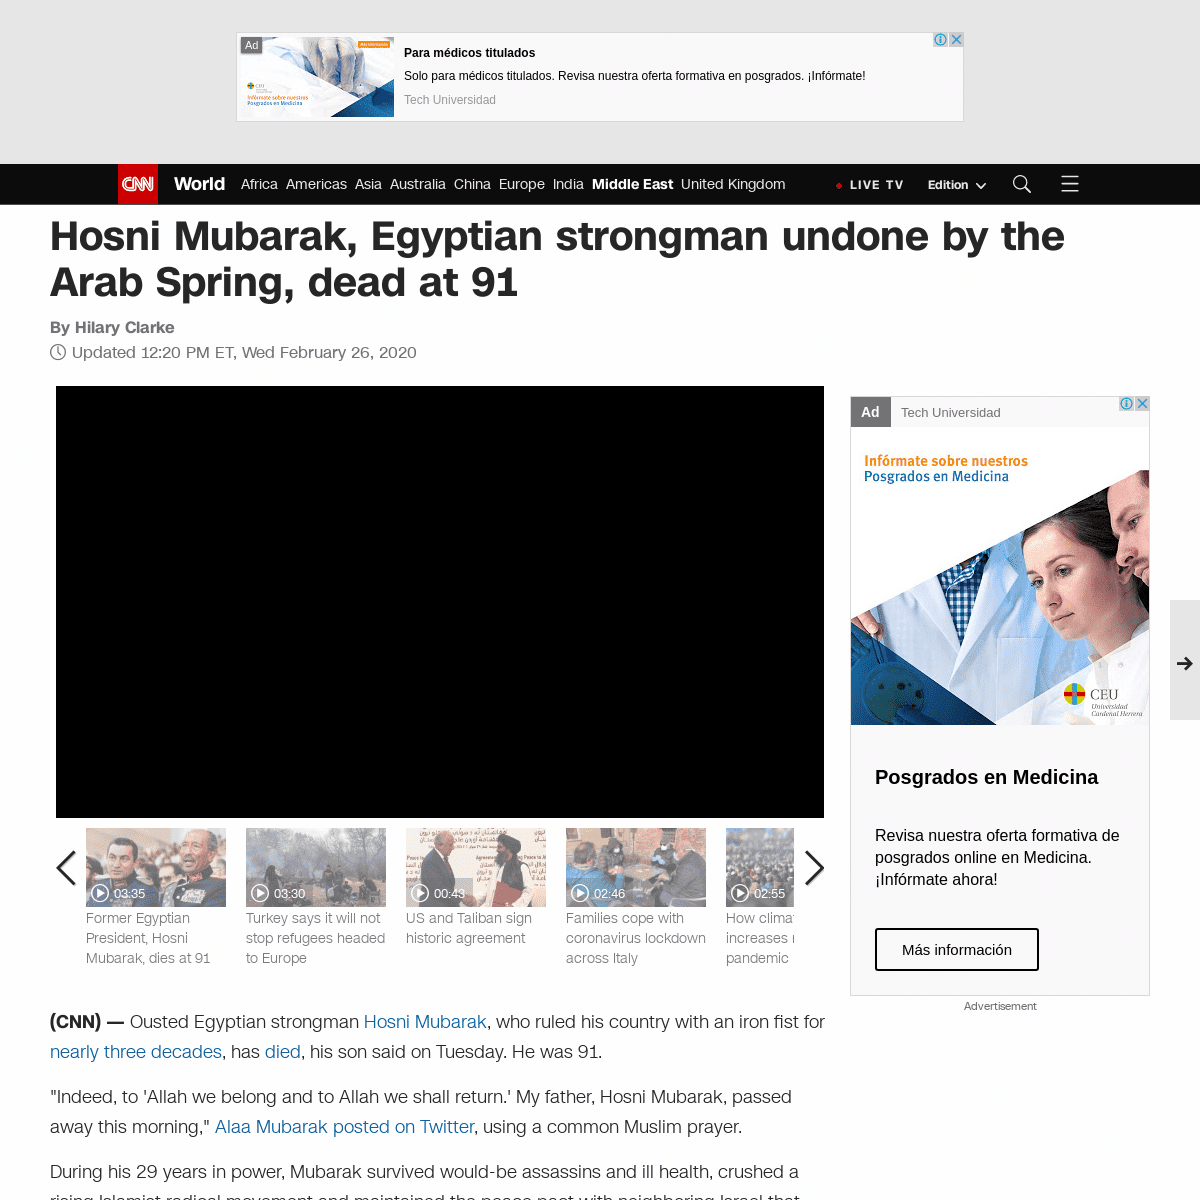 A complete backup of www.cnn.com/2020/02/25/middleeast/hosni-mubarak-egypt-obituary-intl/index.html